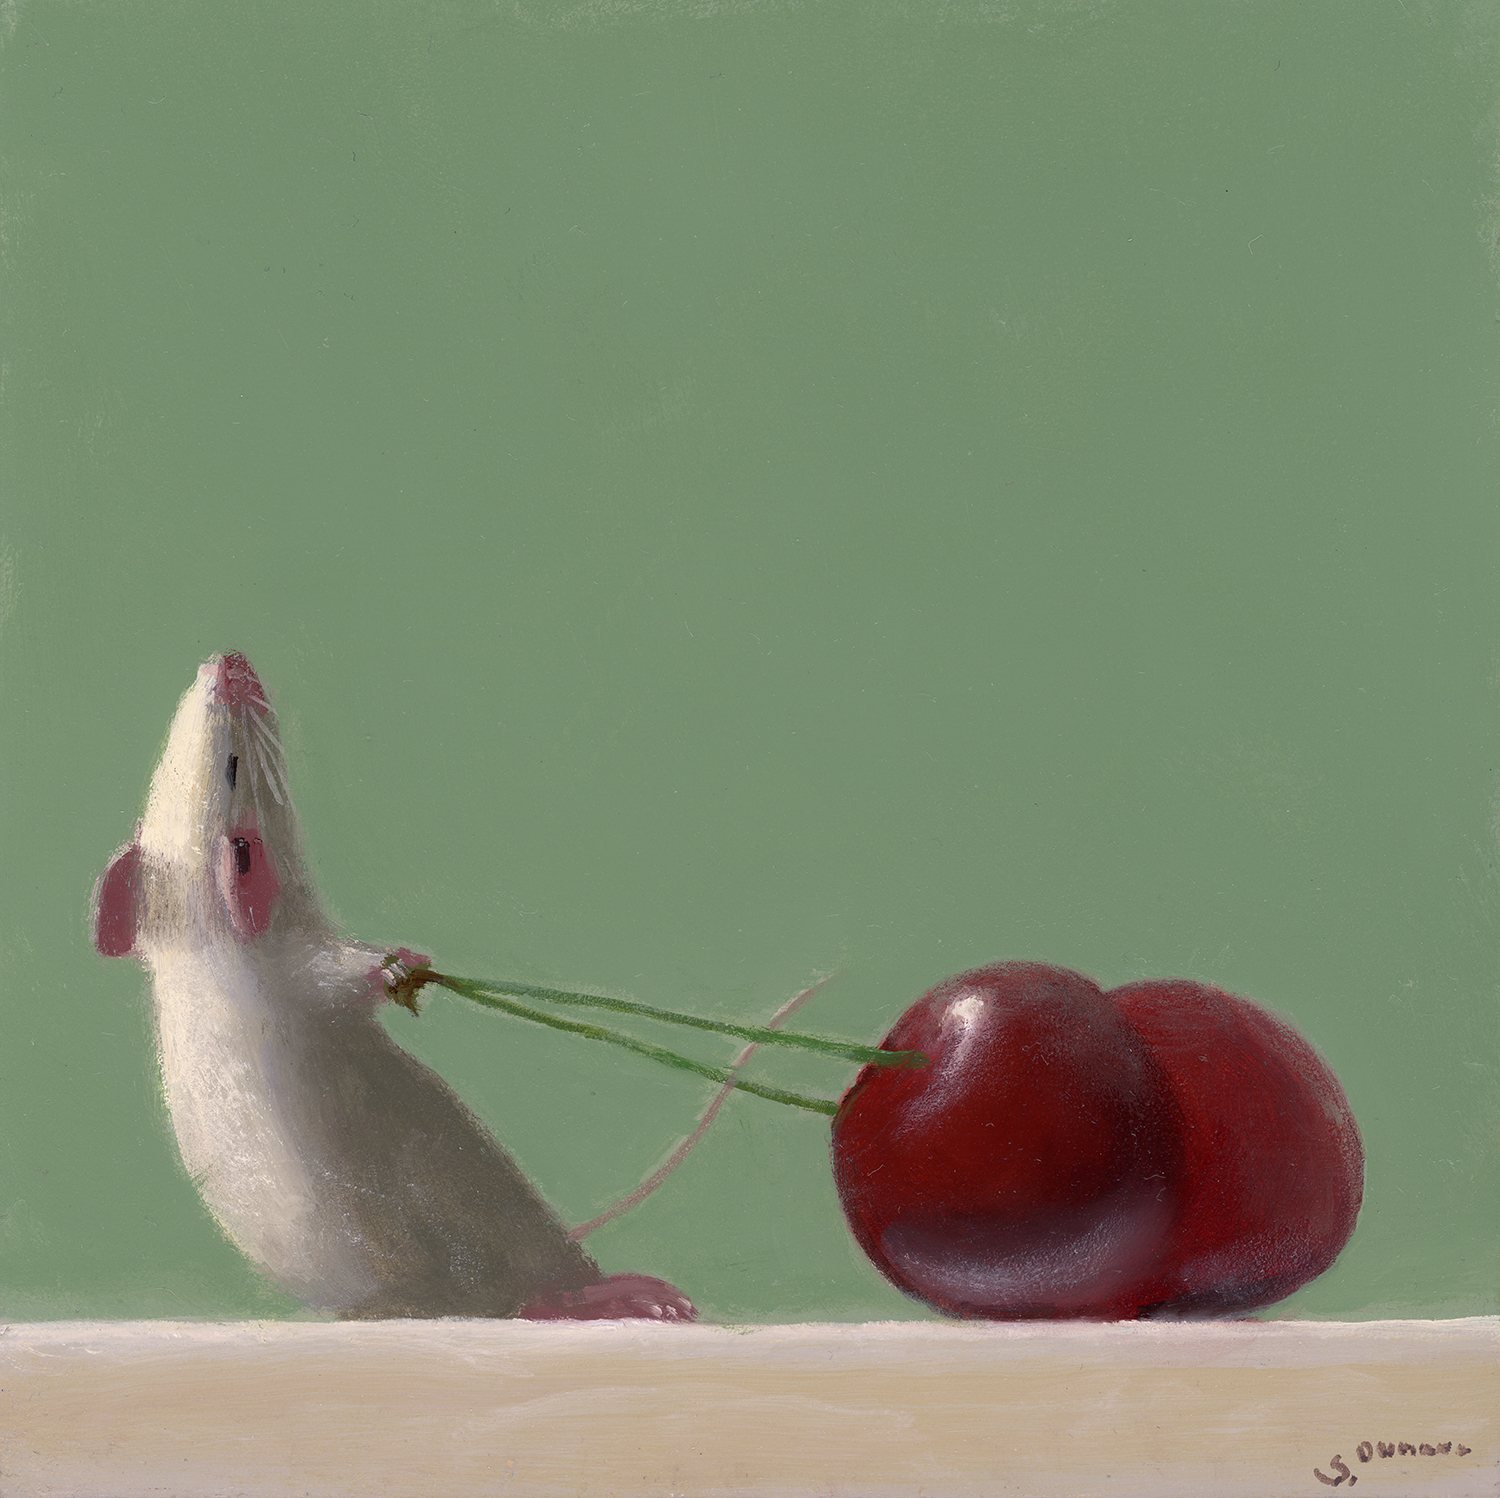 Catching Cherries - Dunkel Stuart